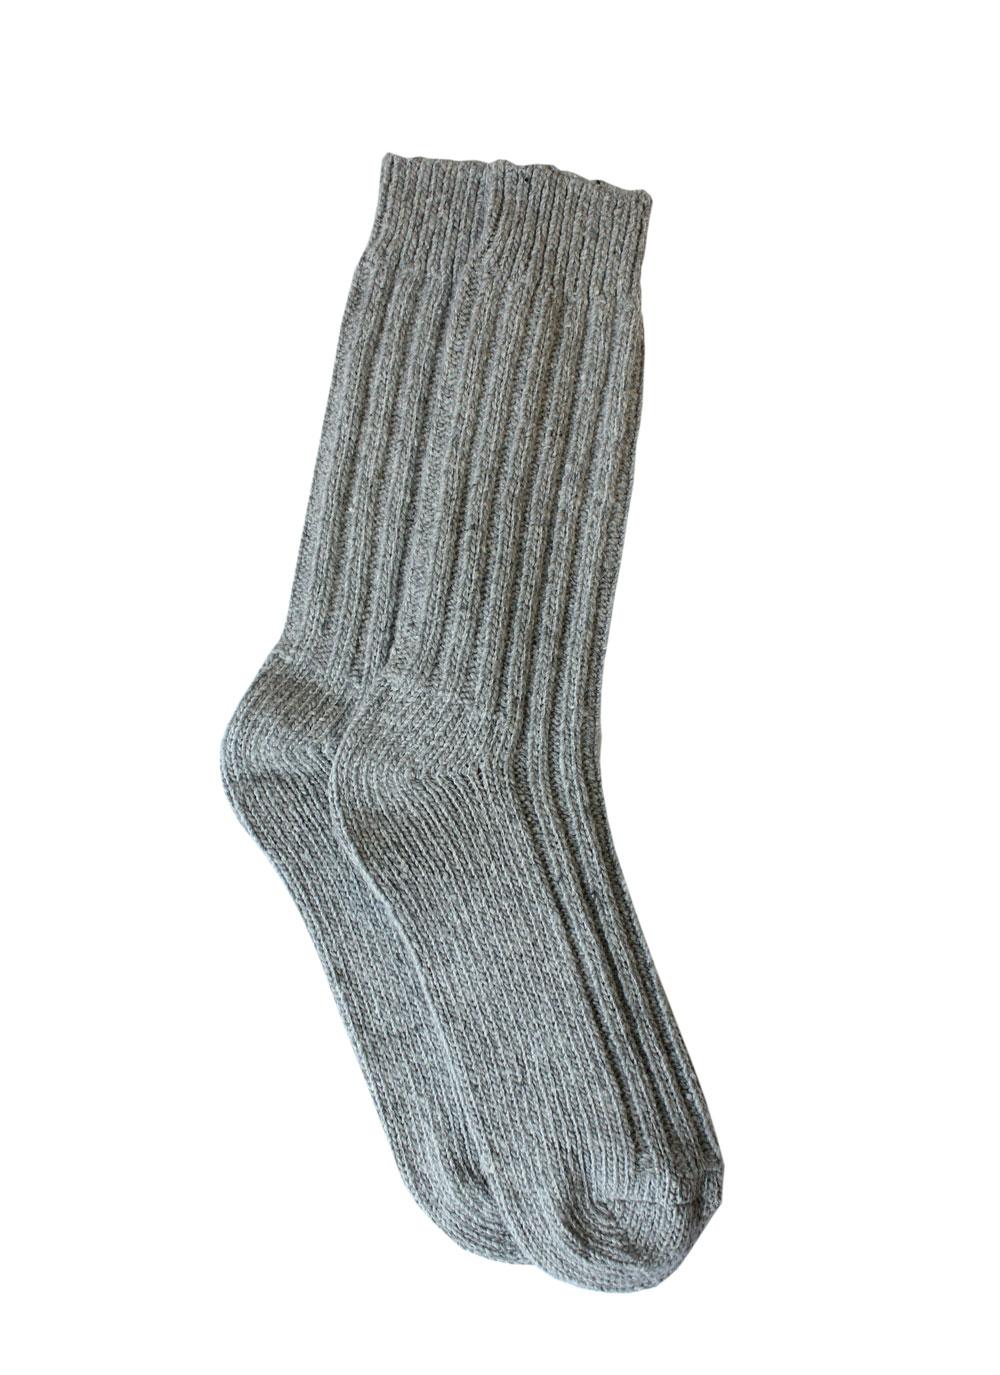 Men's Wool Socks Moss Natural Gray | Blarney